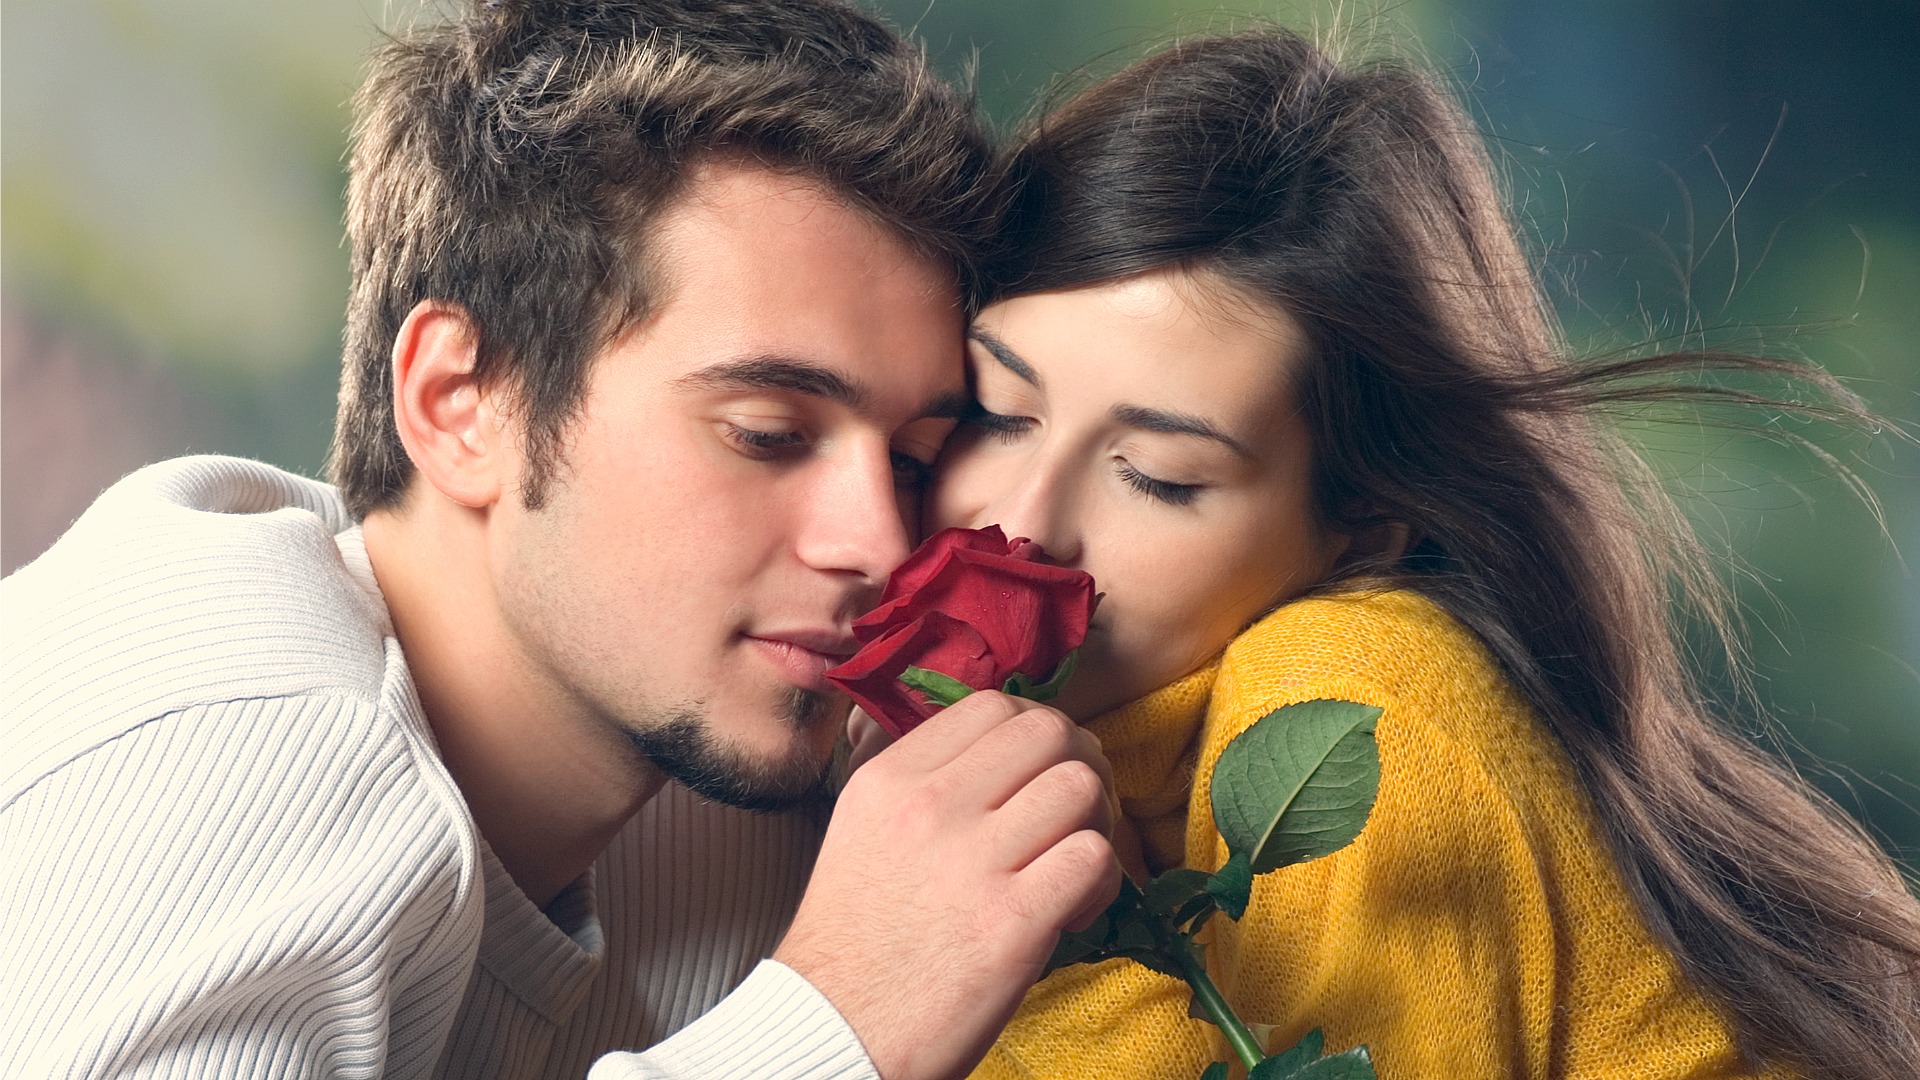 Romantic Love Couple - 1920x1080 Wallpaper 